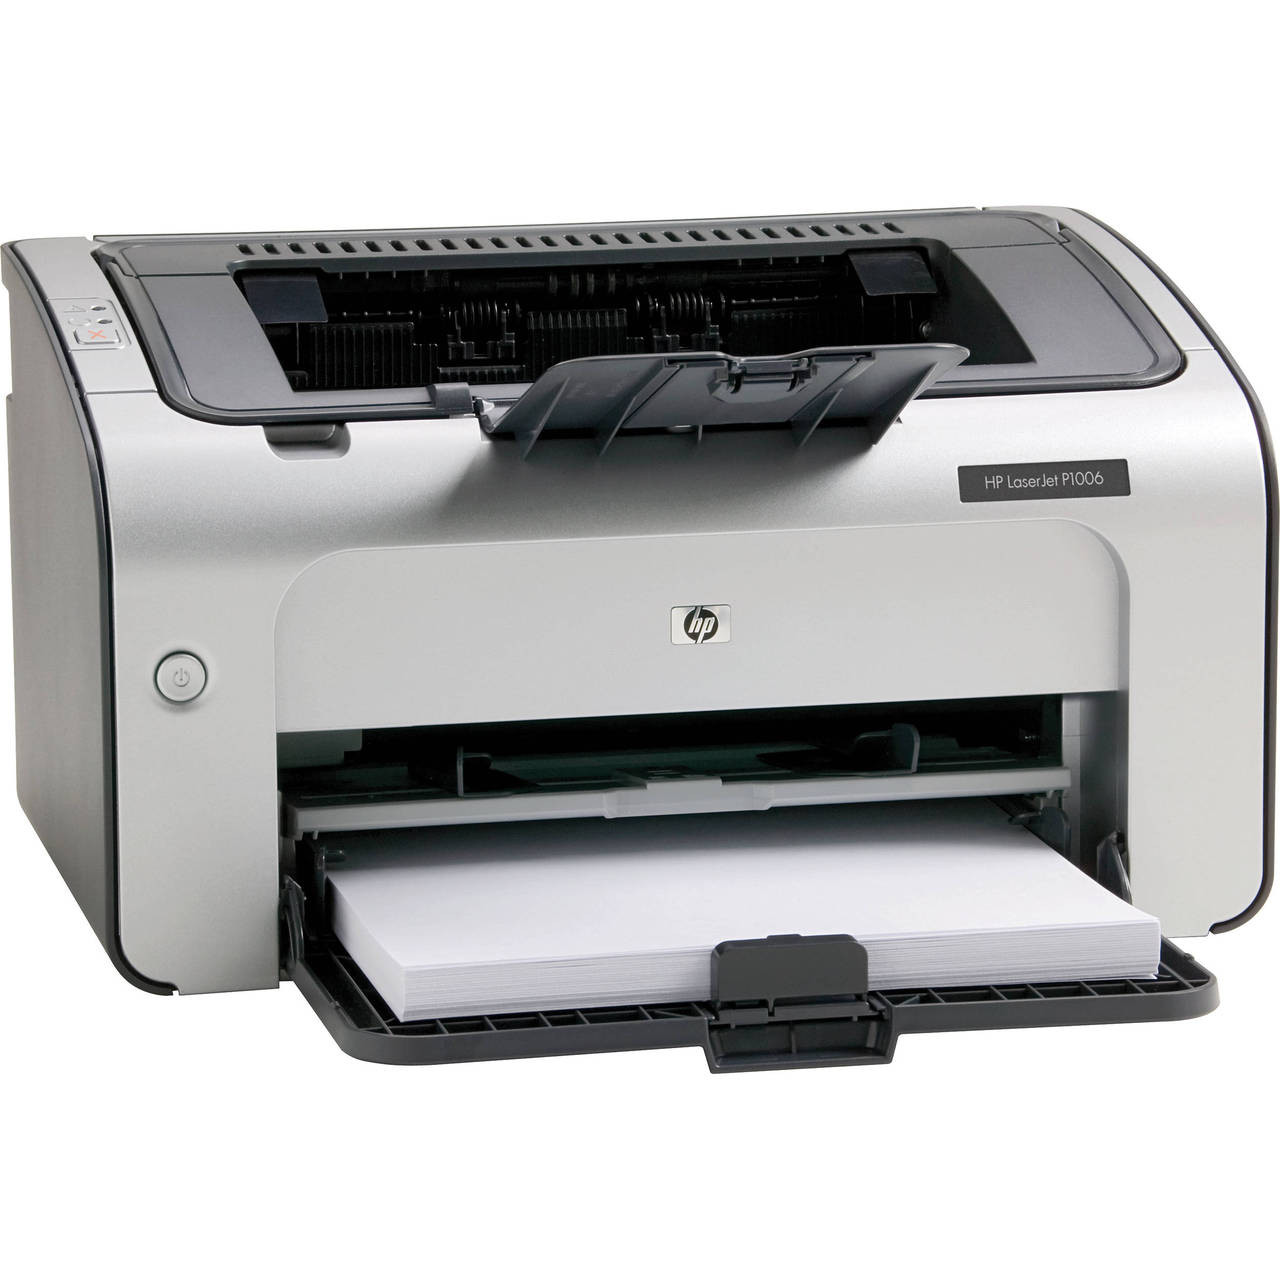 HP LaserJet P1006 - CB411A#ABA  - HP Laser Printer for sale